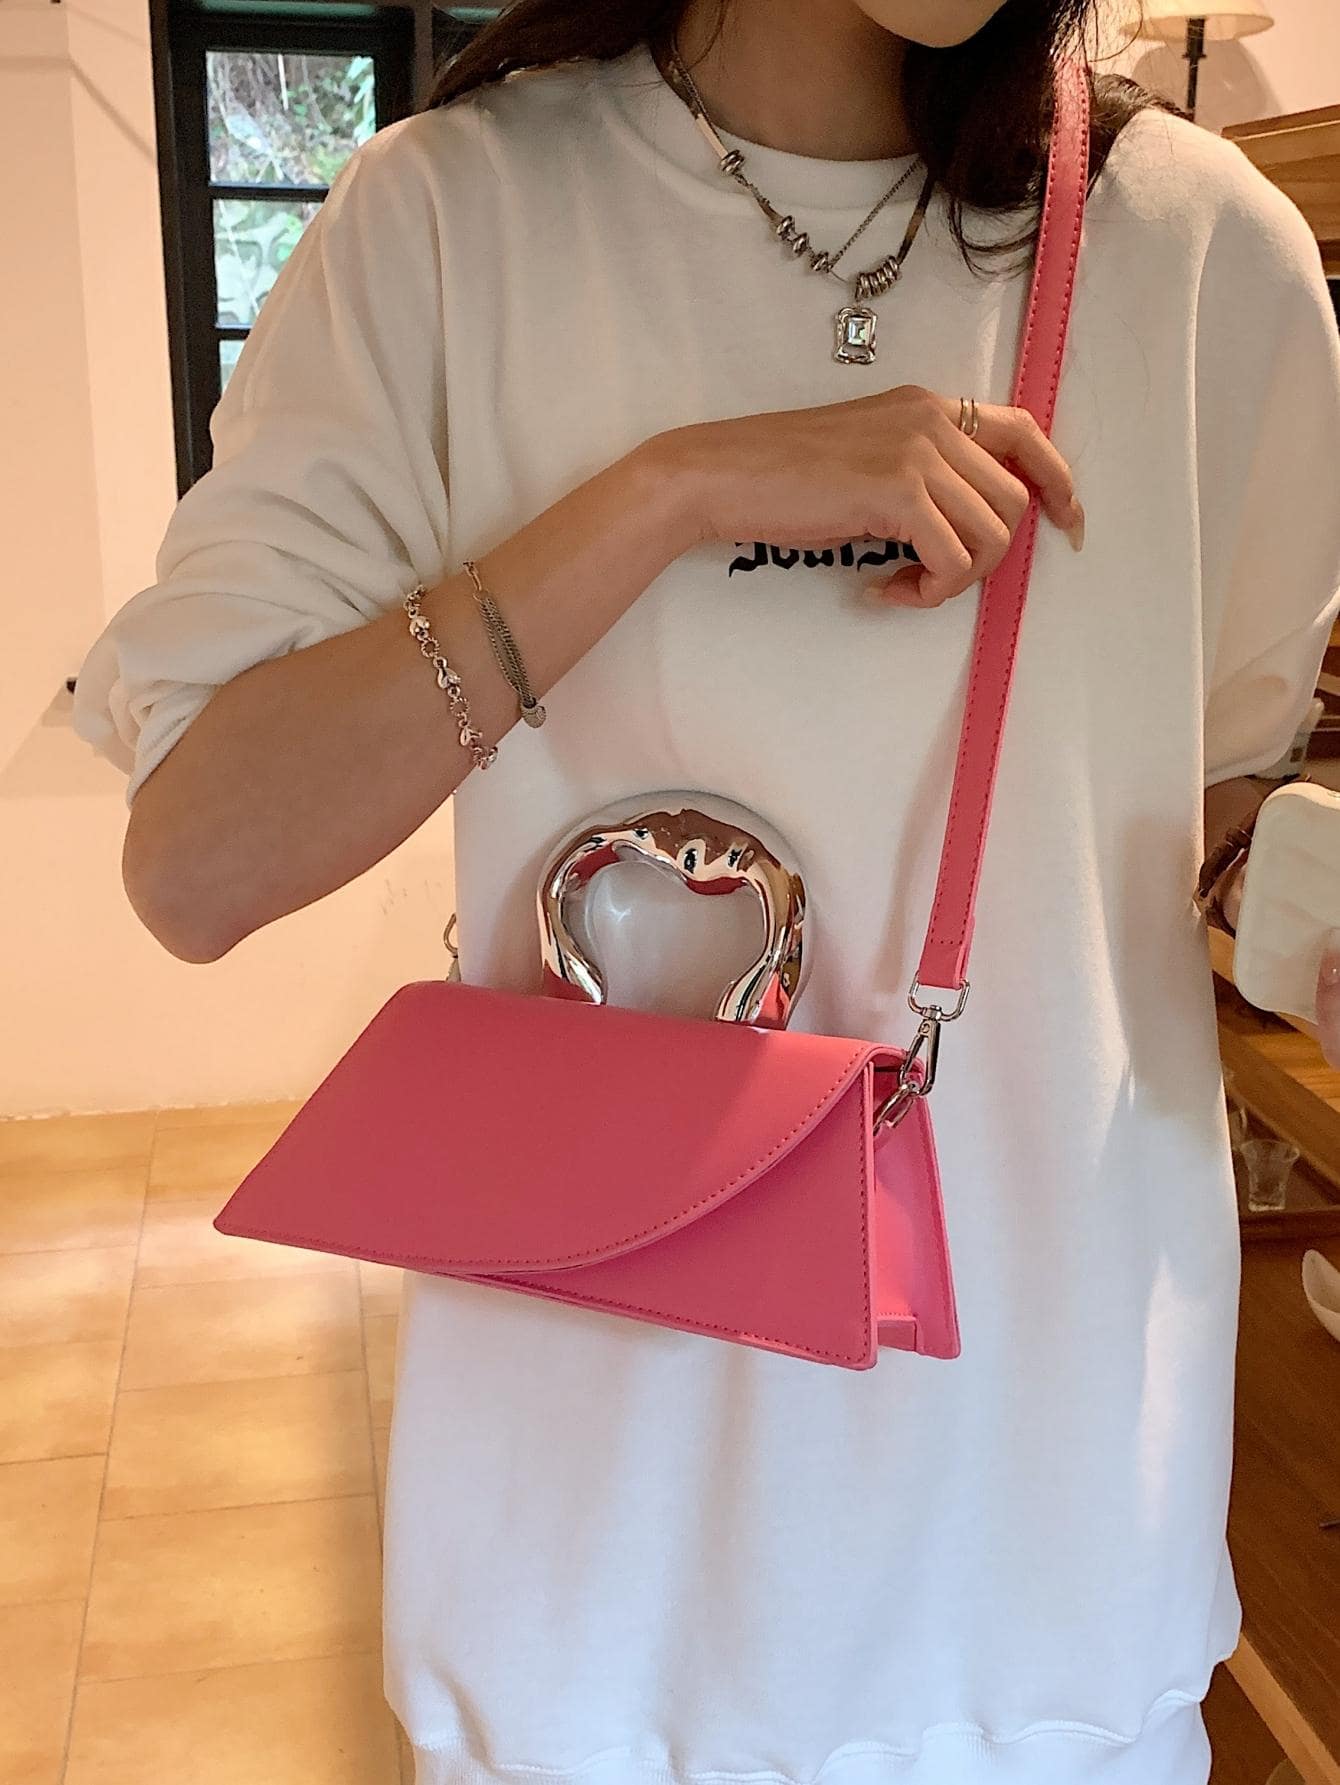 Long Asymmetrical Fashion Metal Clutch Bag With Flap